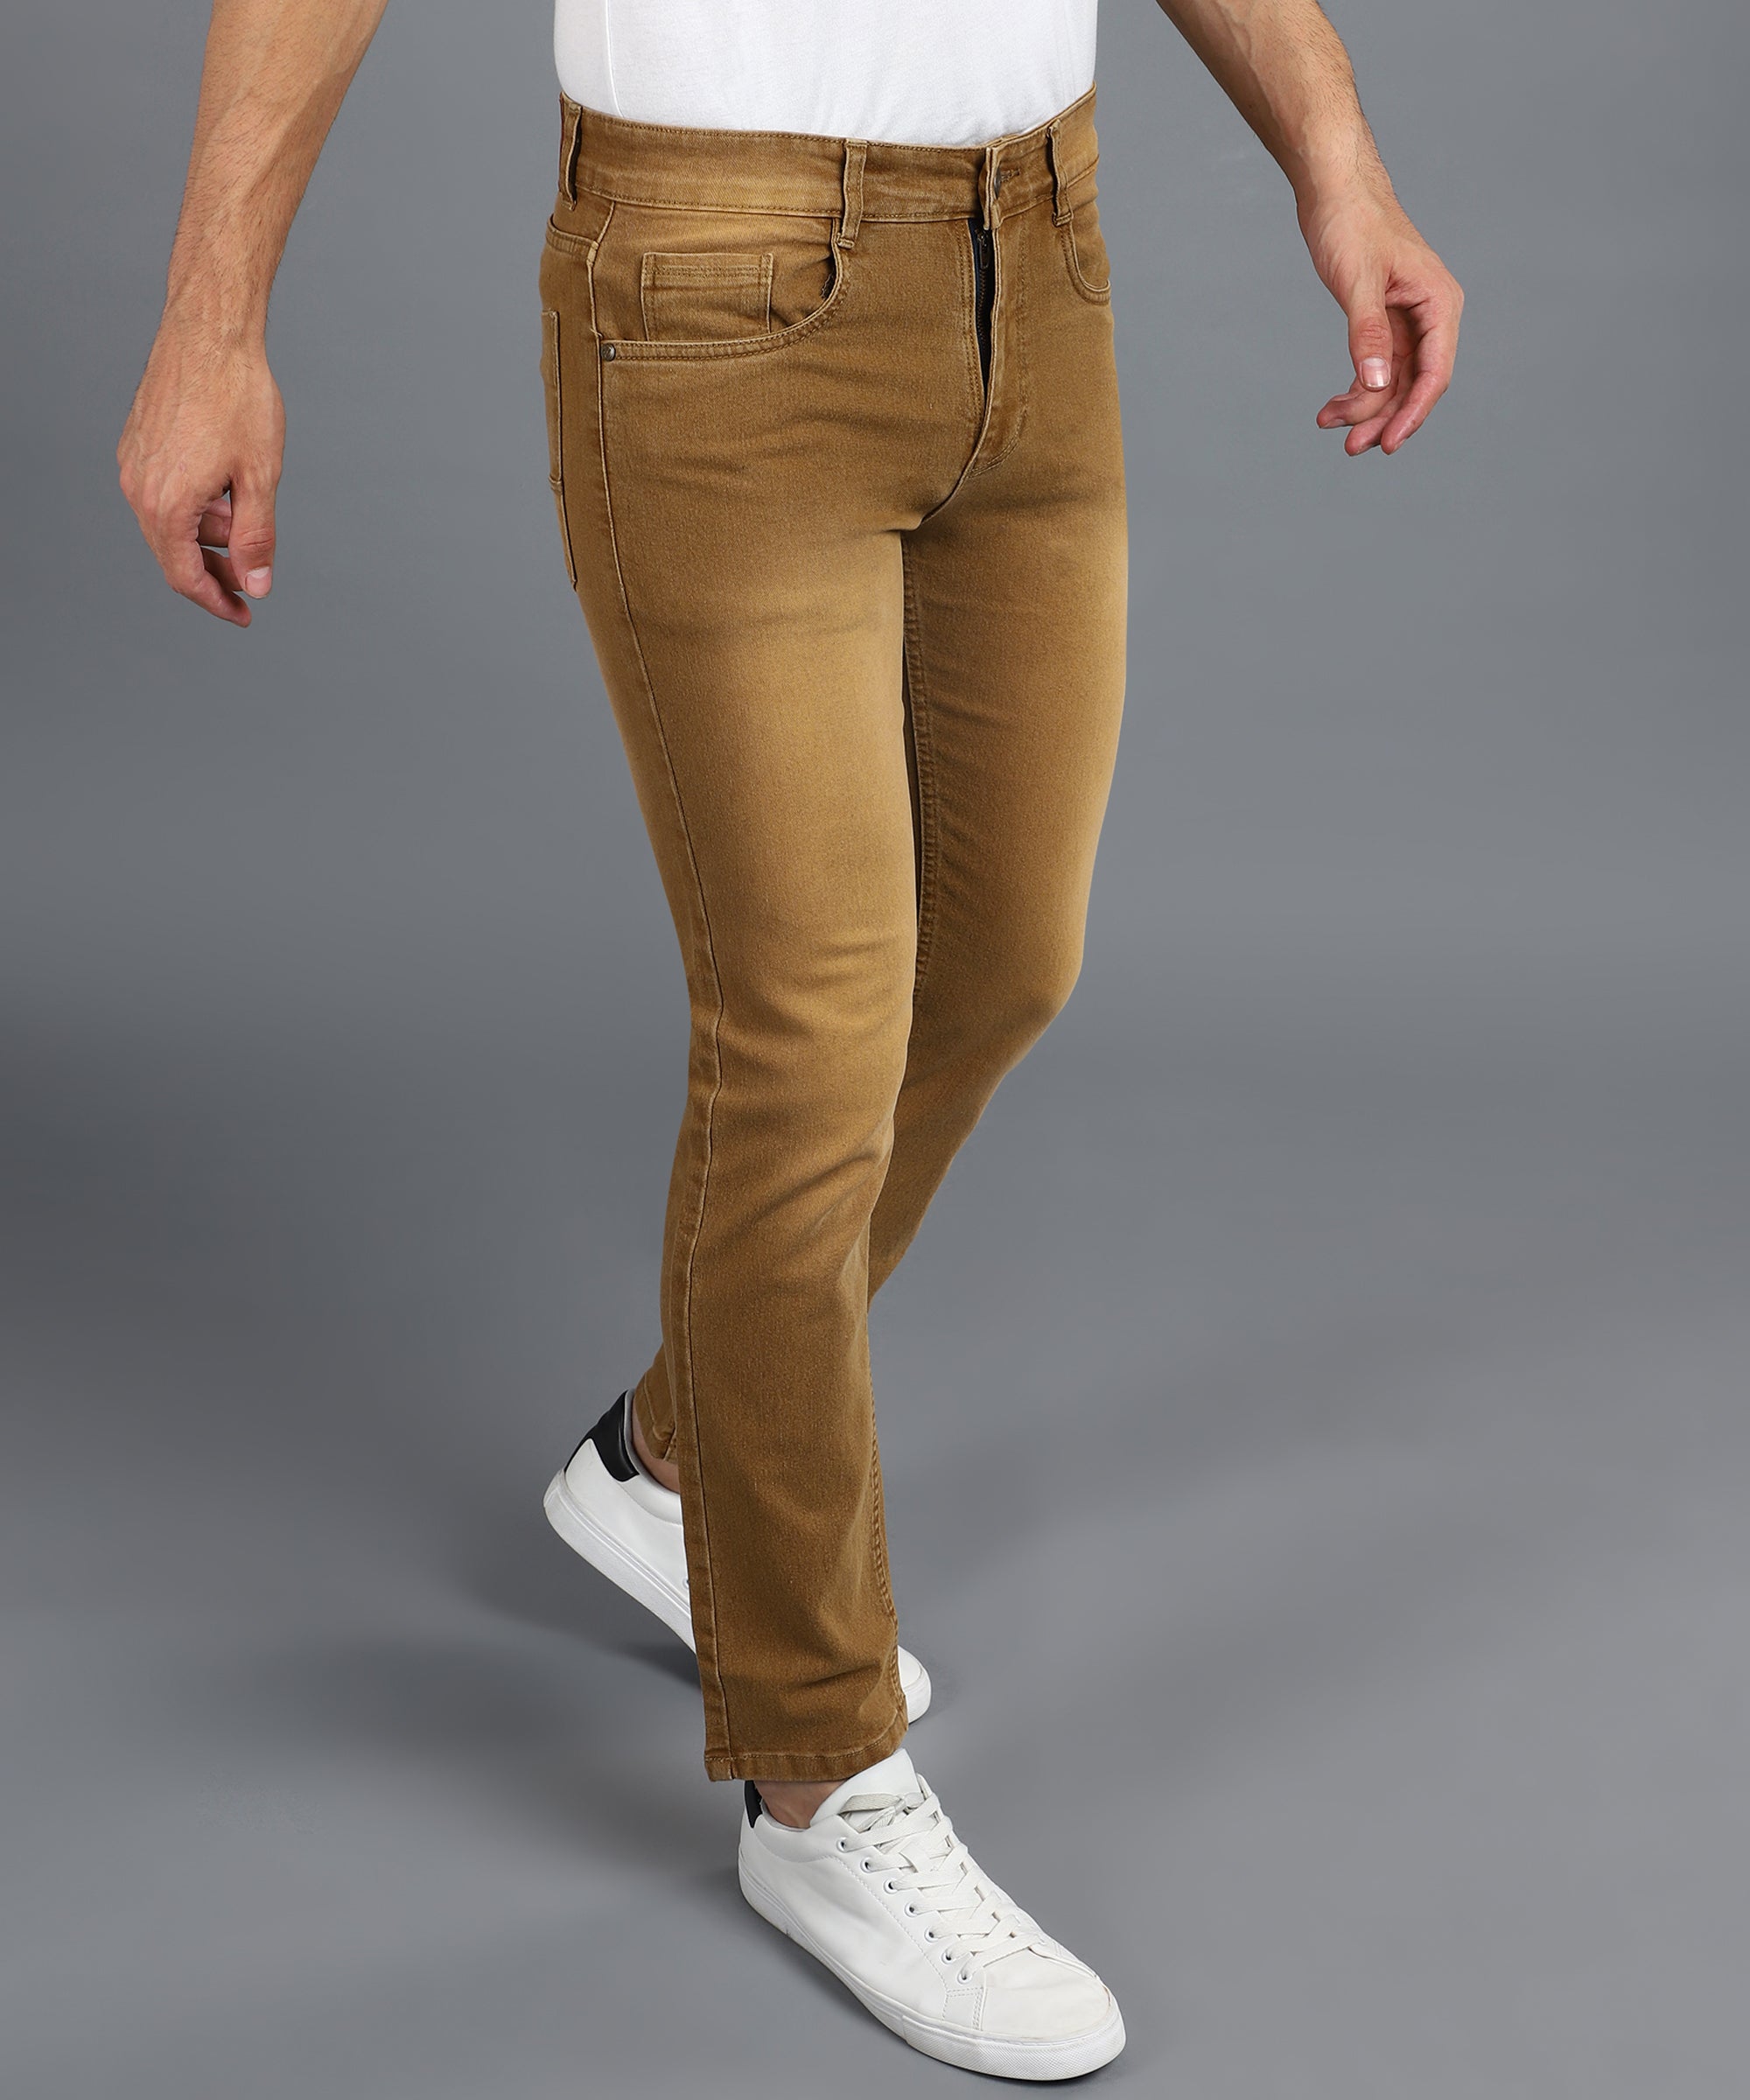 Urbano Fashion Men's Khaki Regular Fit Washed Jeans Stretchable